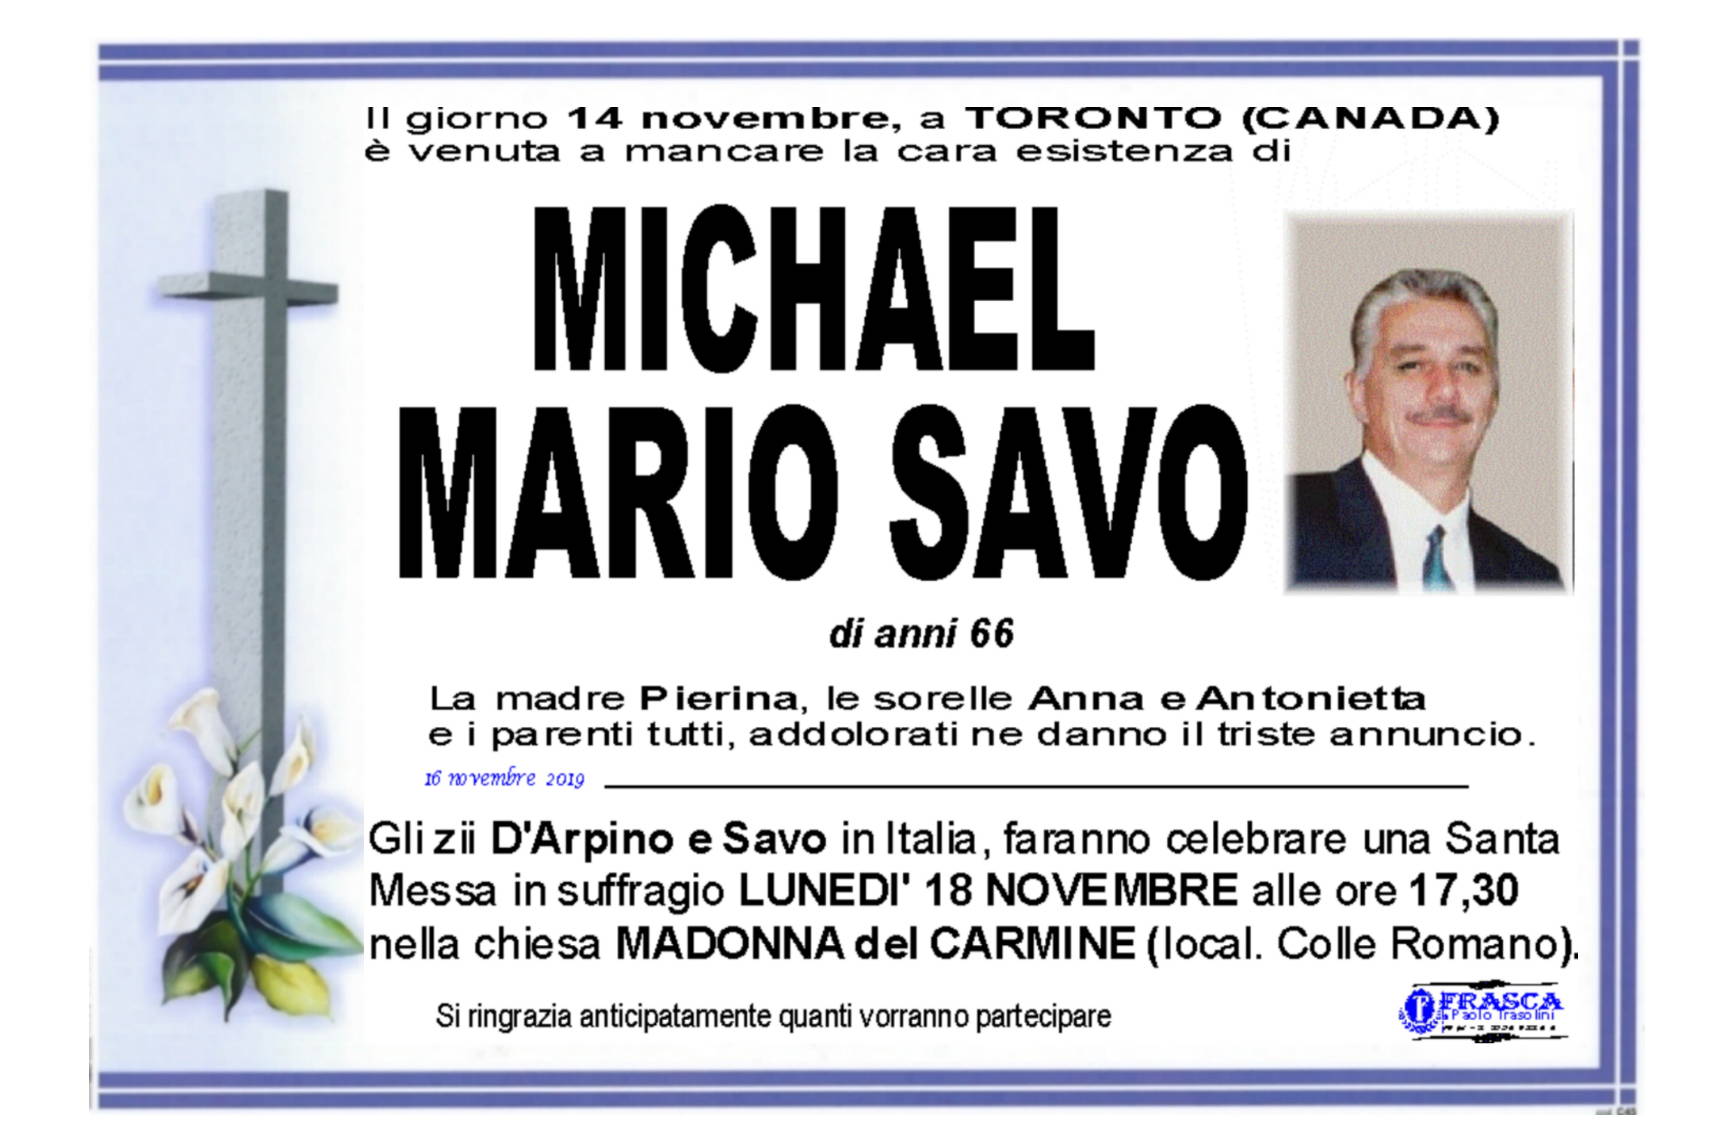 Michael Mario Savo